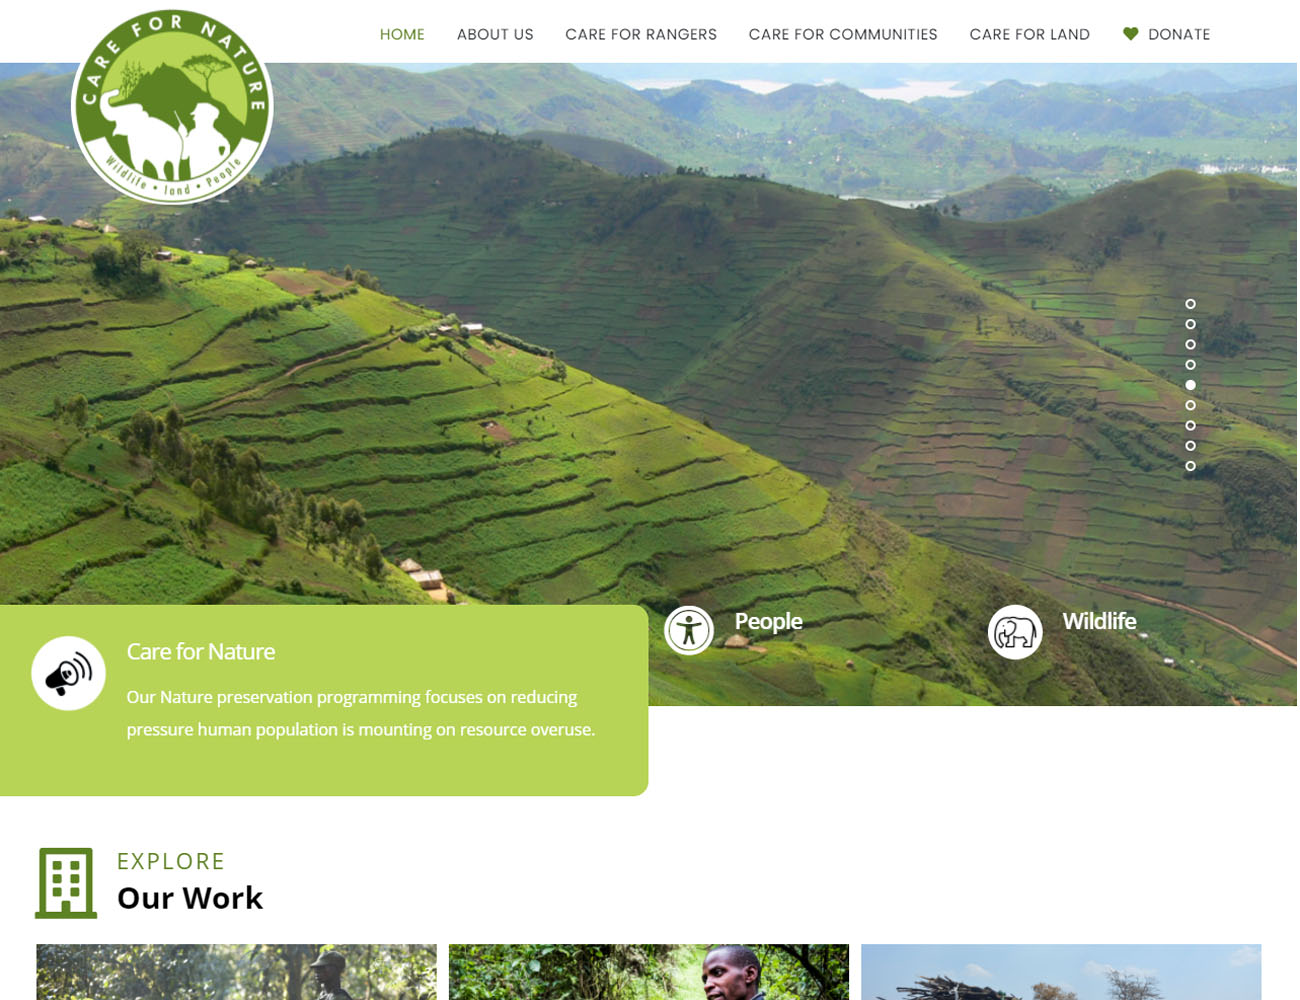 CARE FOR NATURE WEBSITE DESIGNED BY HOST GIANT UGANDA